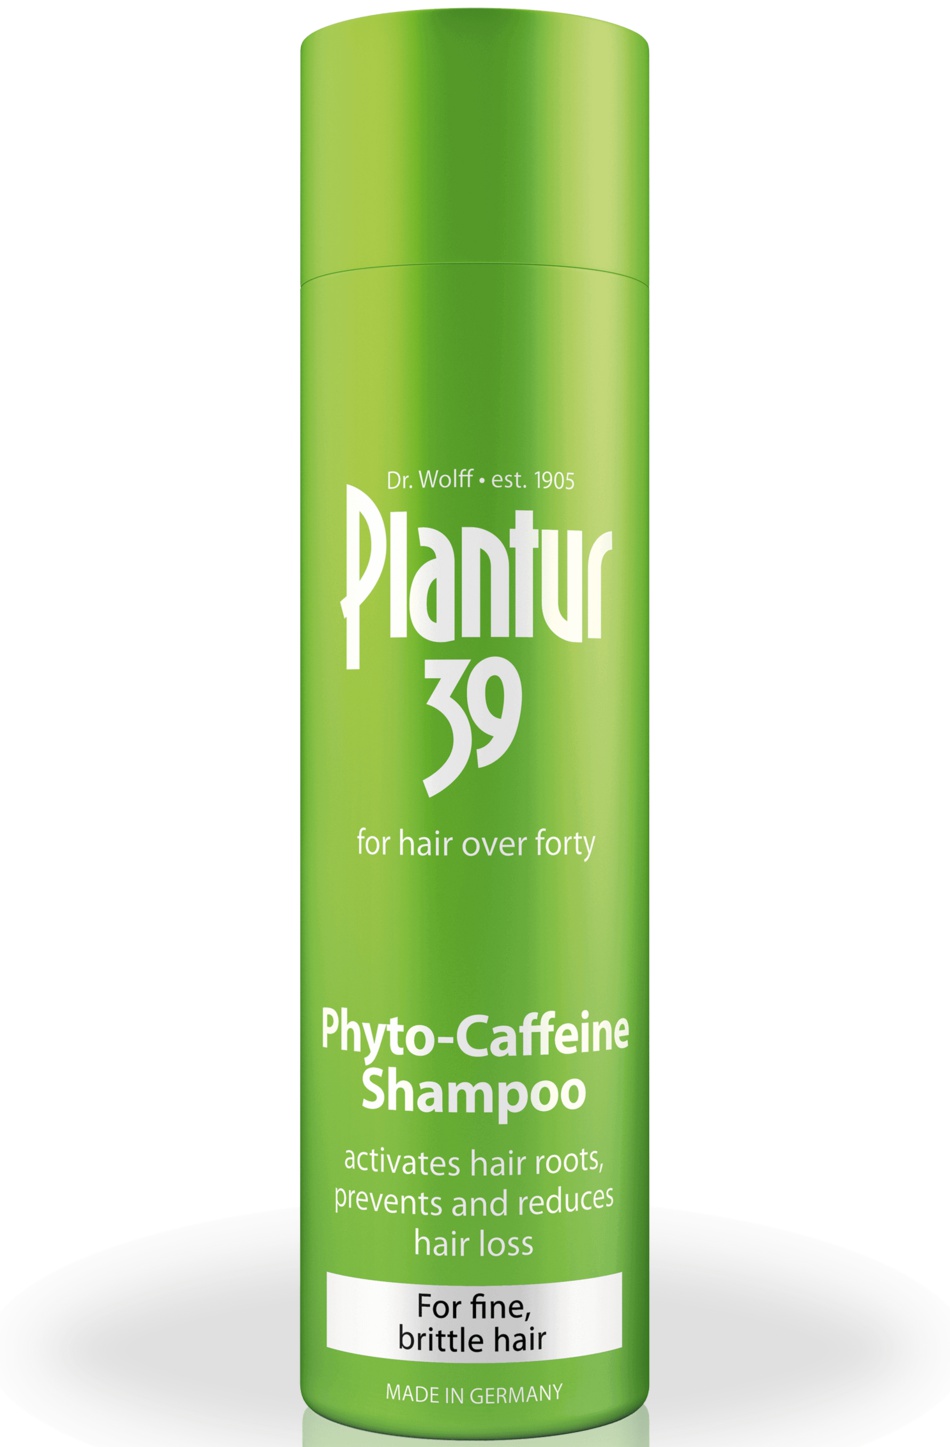 Plantur 39 Phyto-Caffeine Shampoo